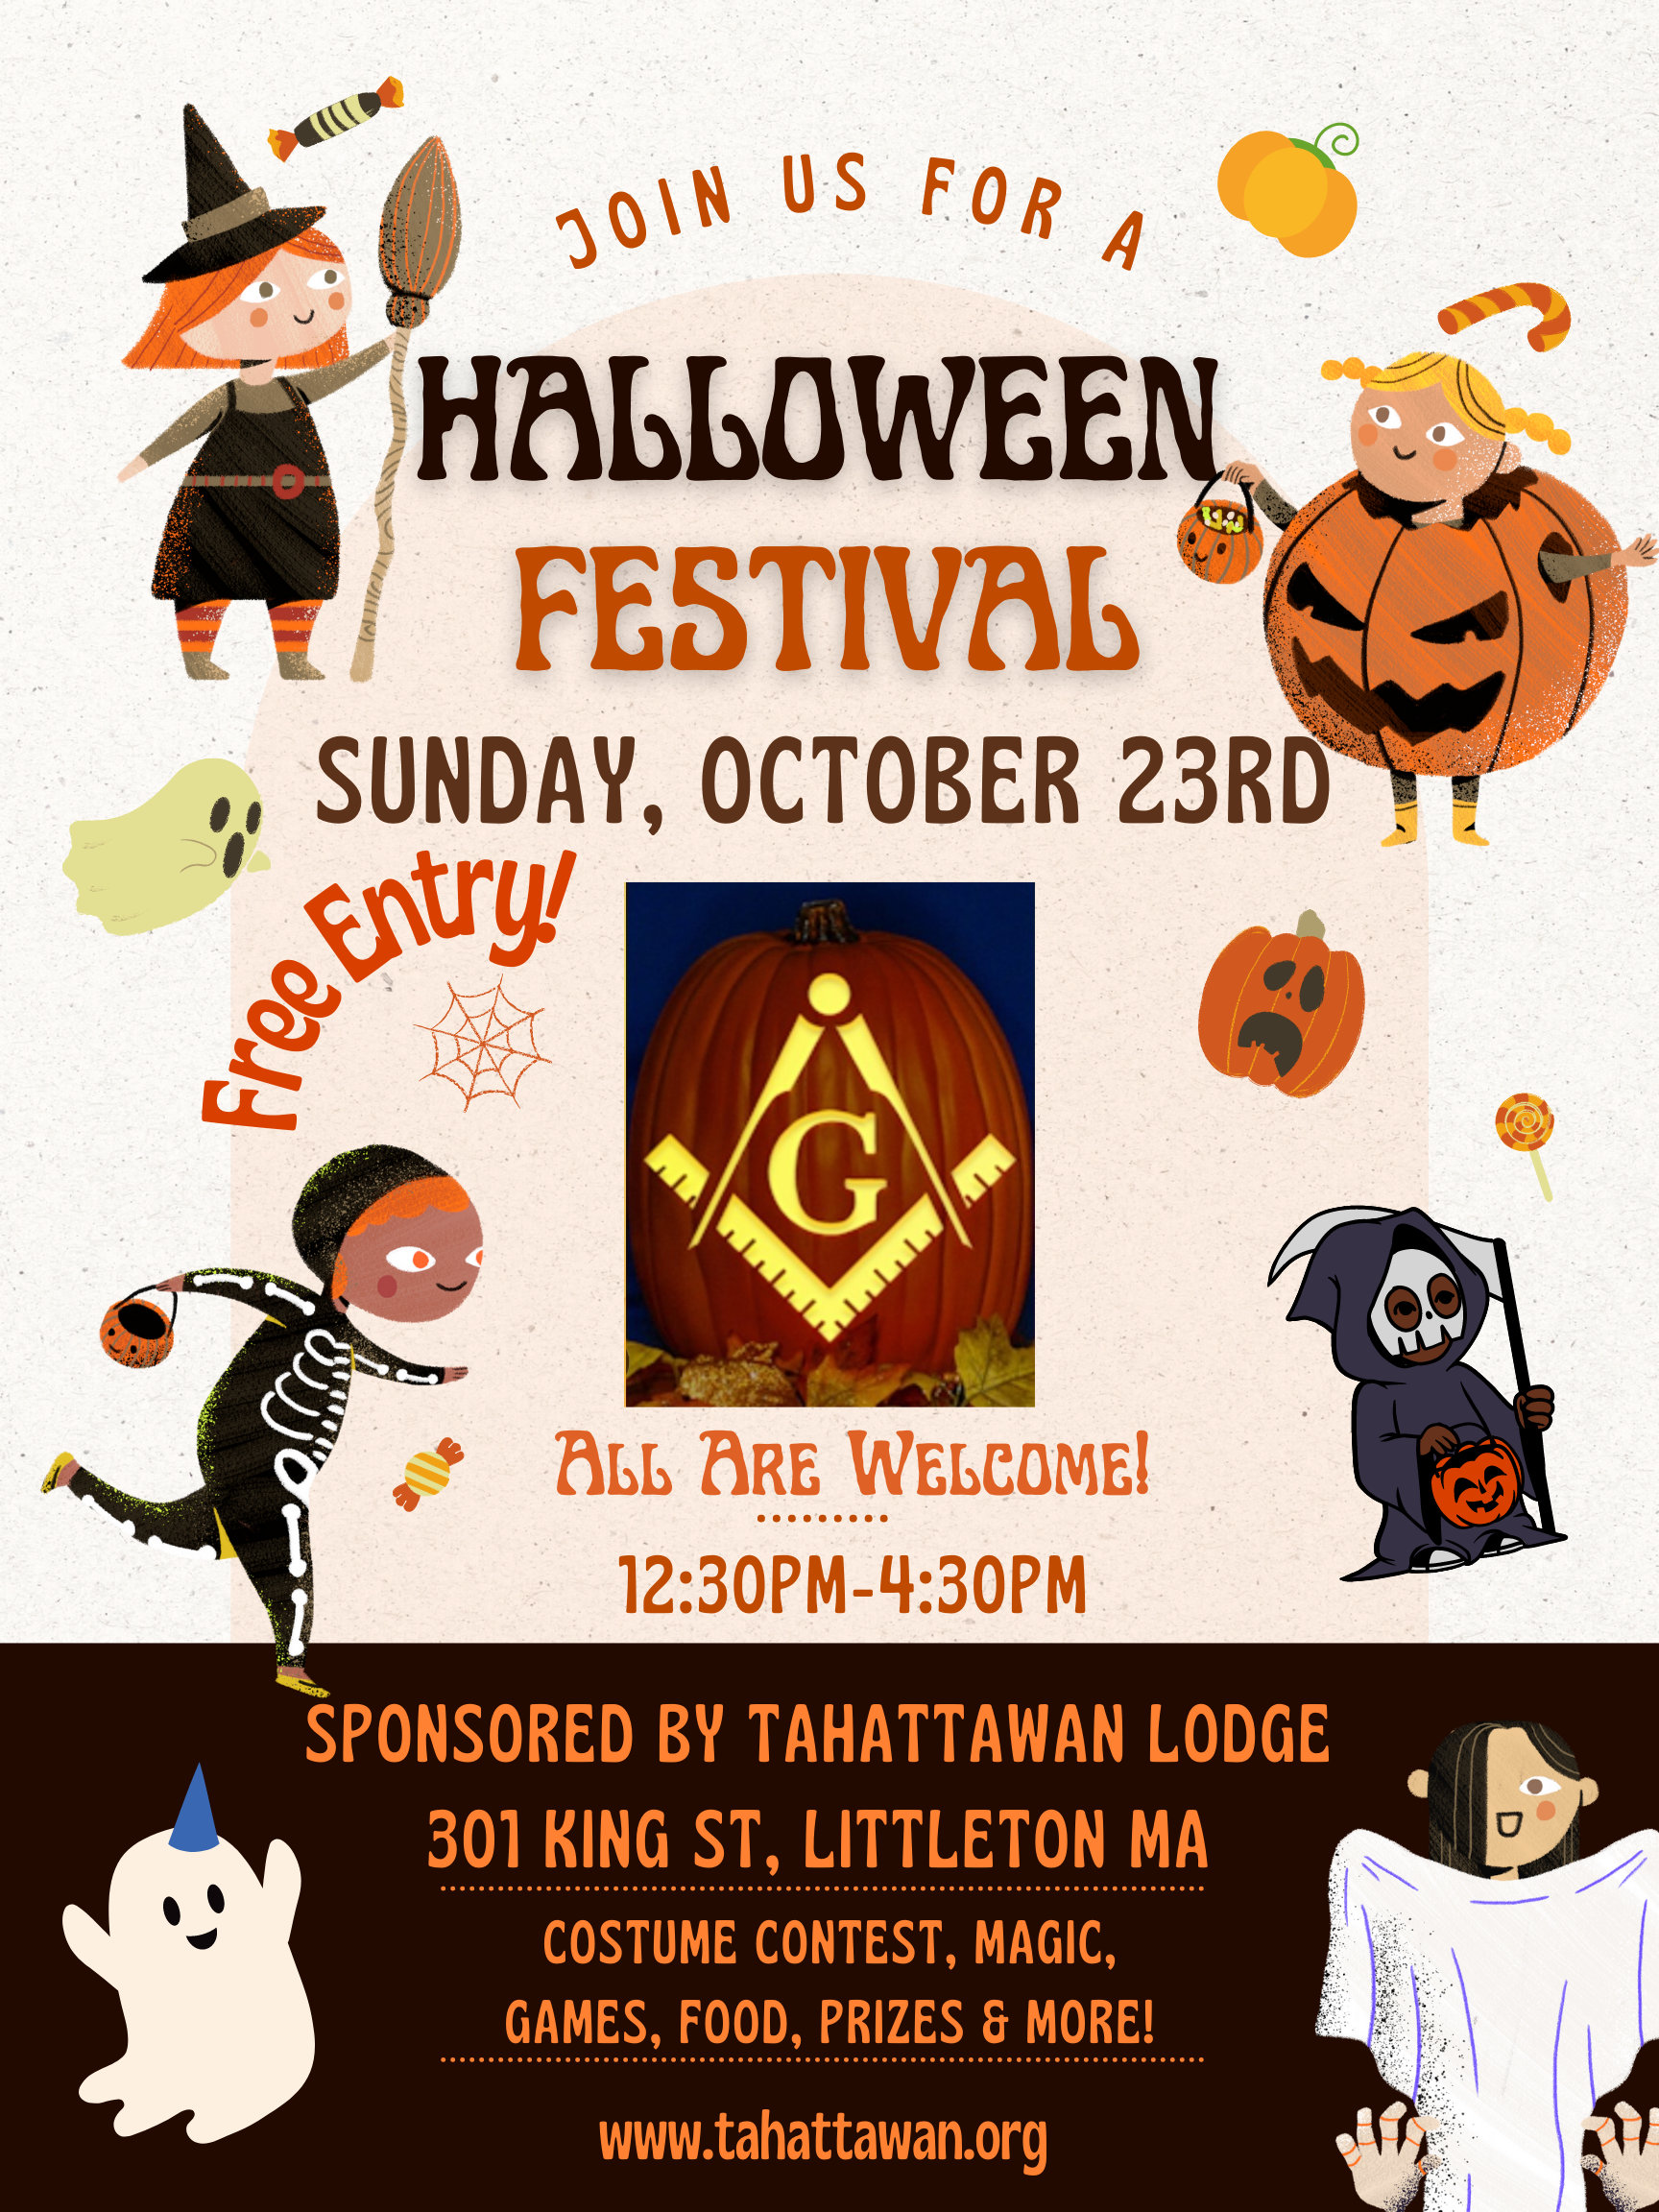 Halloween Festival Sponsored by Tahattawan Lodge!